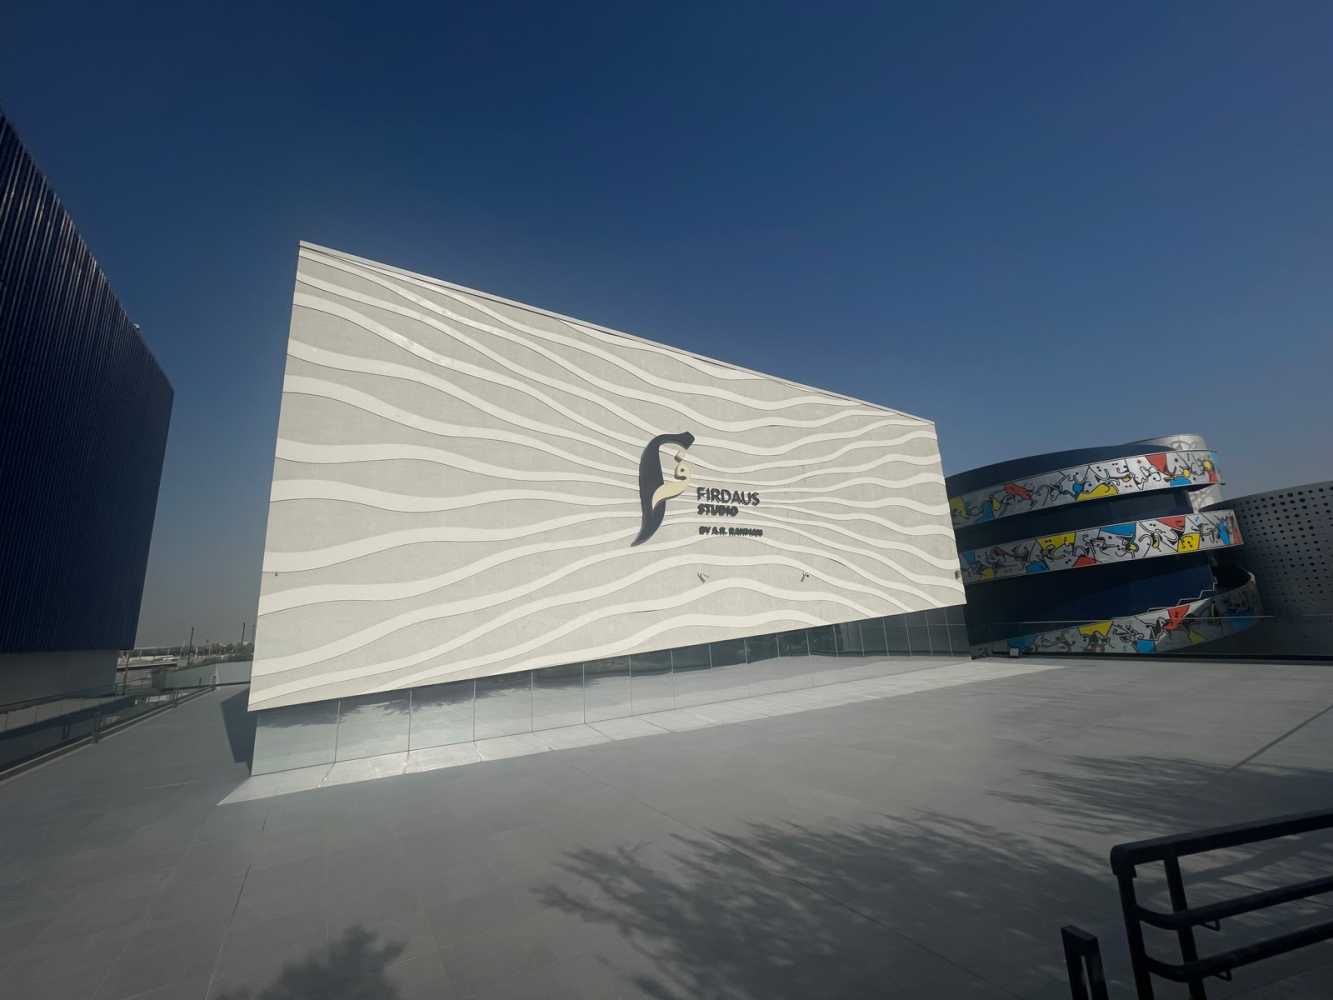 The multi-million-dollar Firdaus Studio in Dubai opened its doors in early 2022